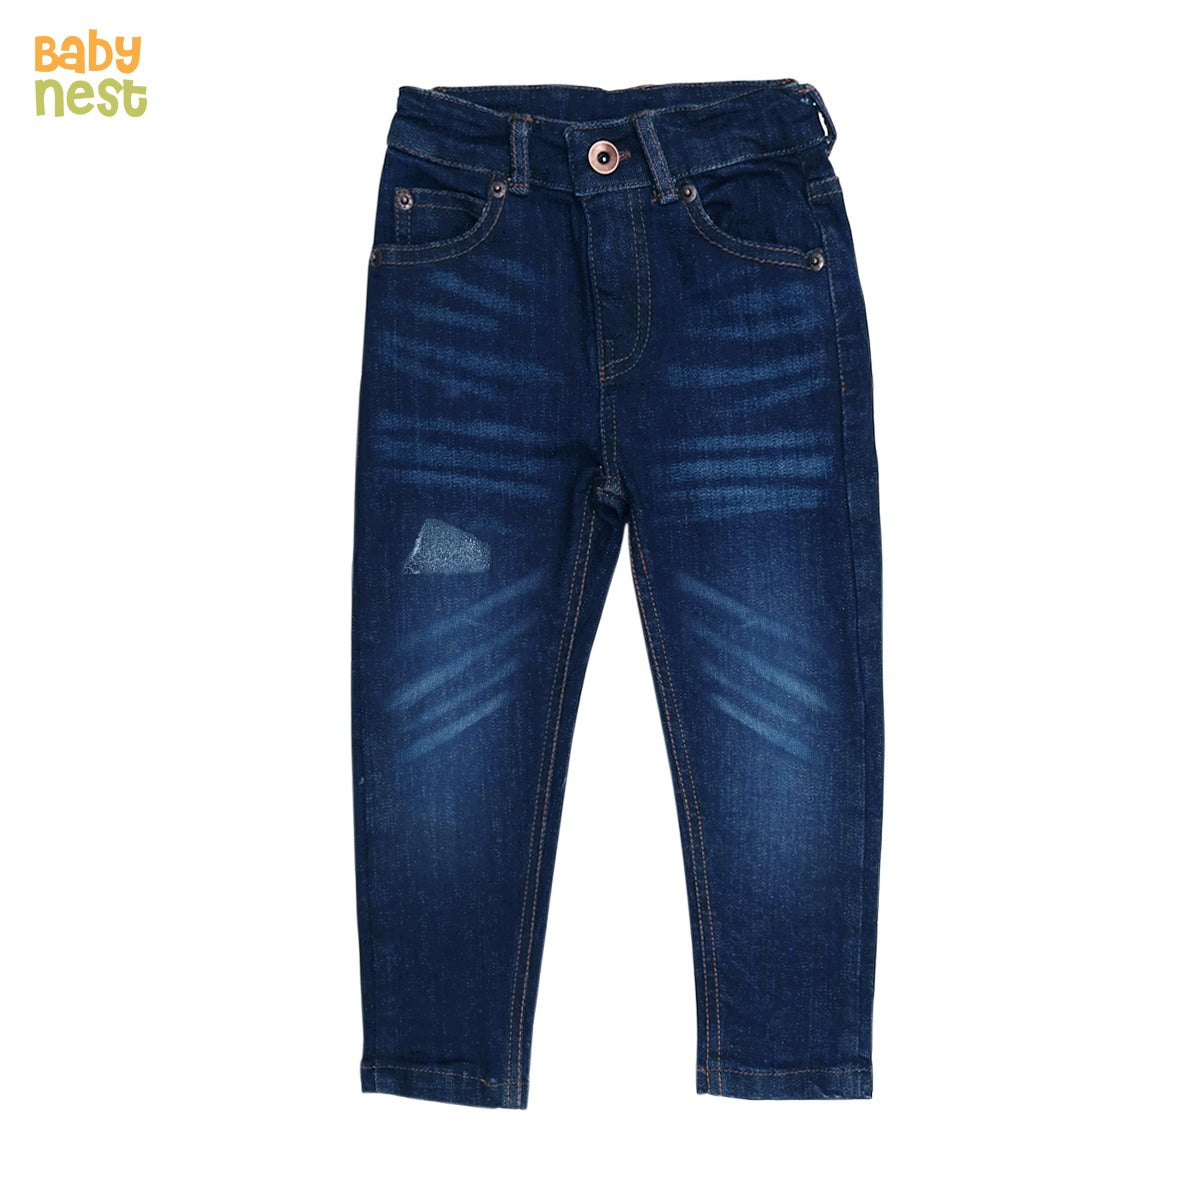 Denim Jeans for Kids - BNBDJ - 09